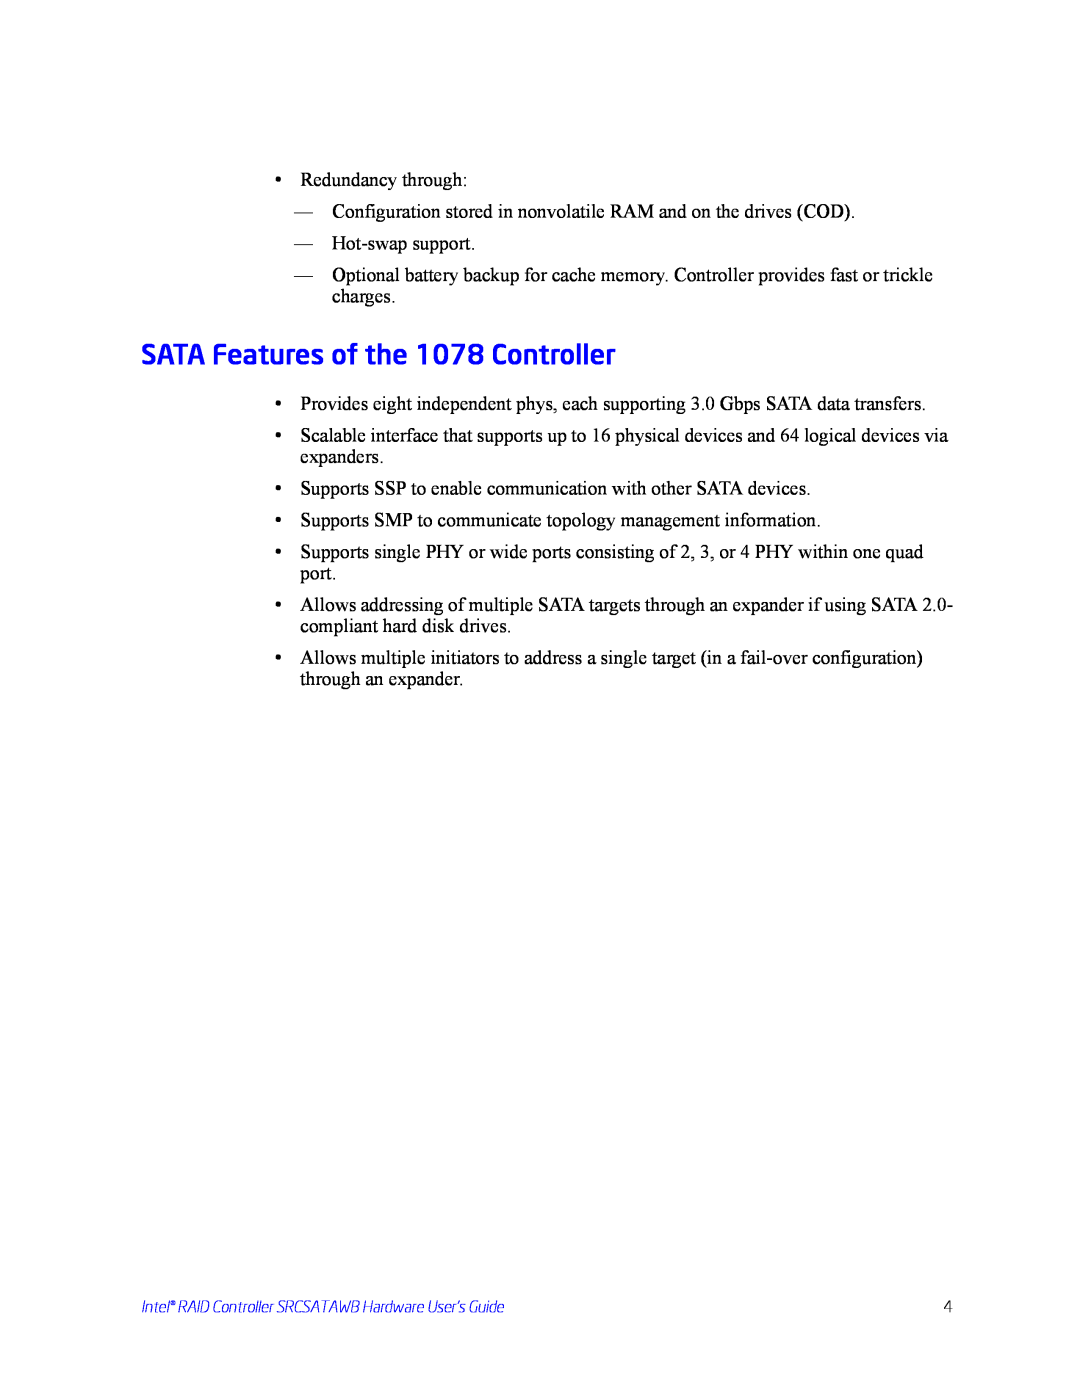 Intel SRCSATAWB manual SATA Features of the 1078 Controller 